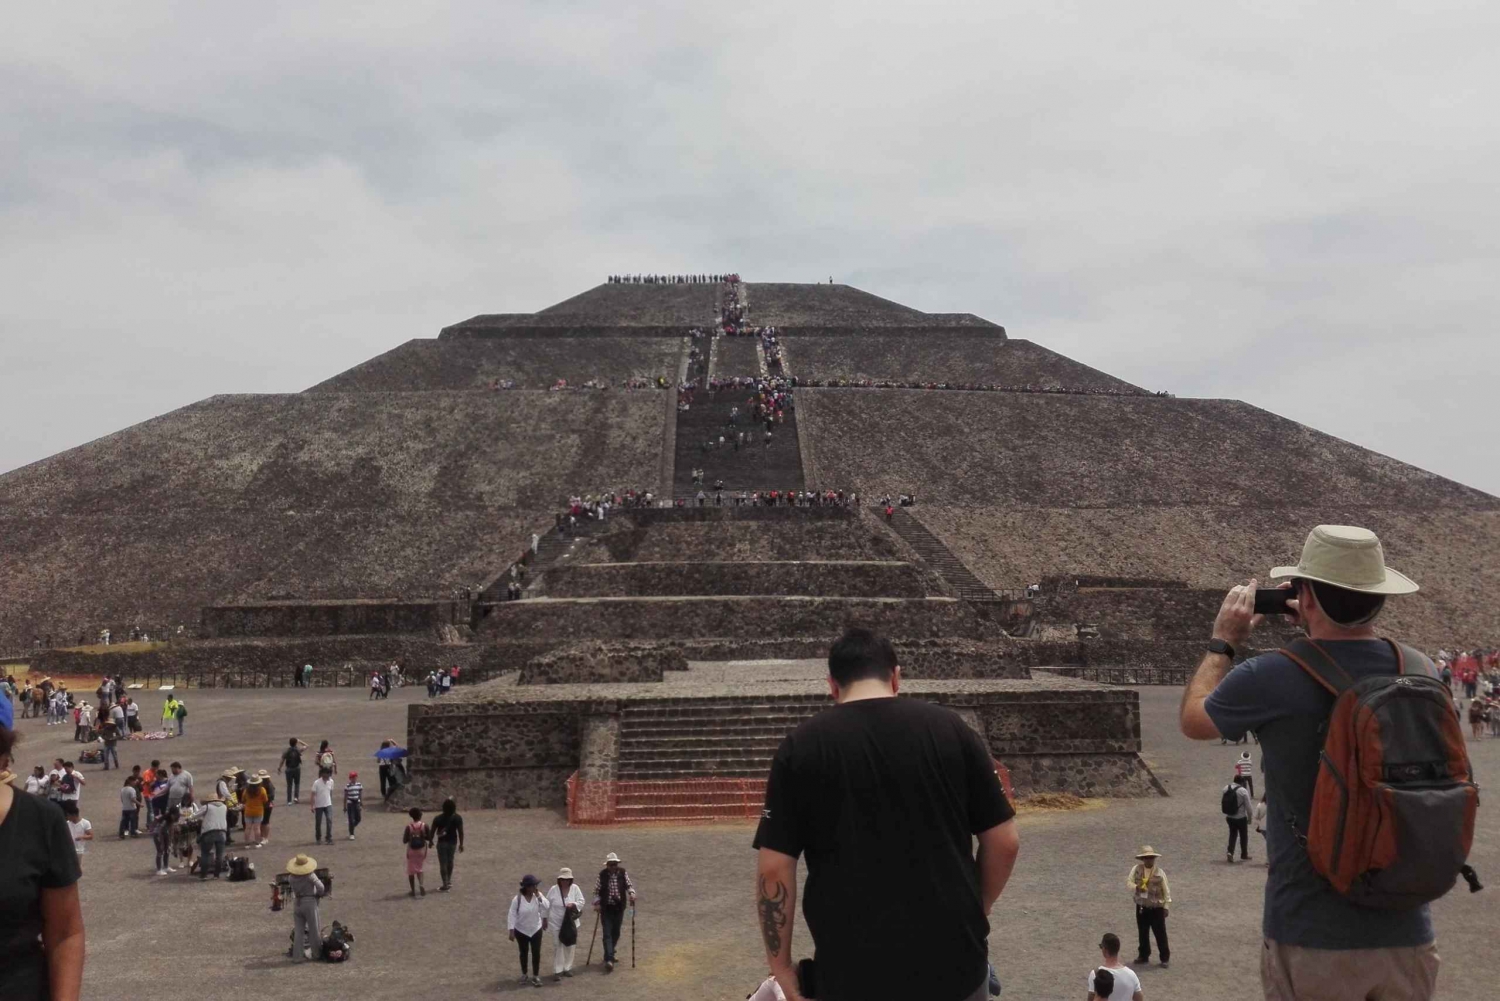 Teotihuacán, Plaza de las Tres Culturas, and Acolman Tour